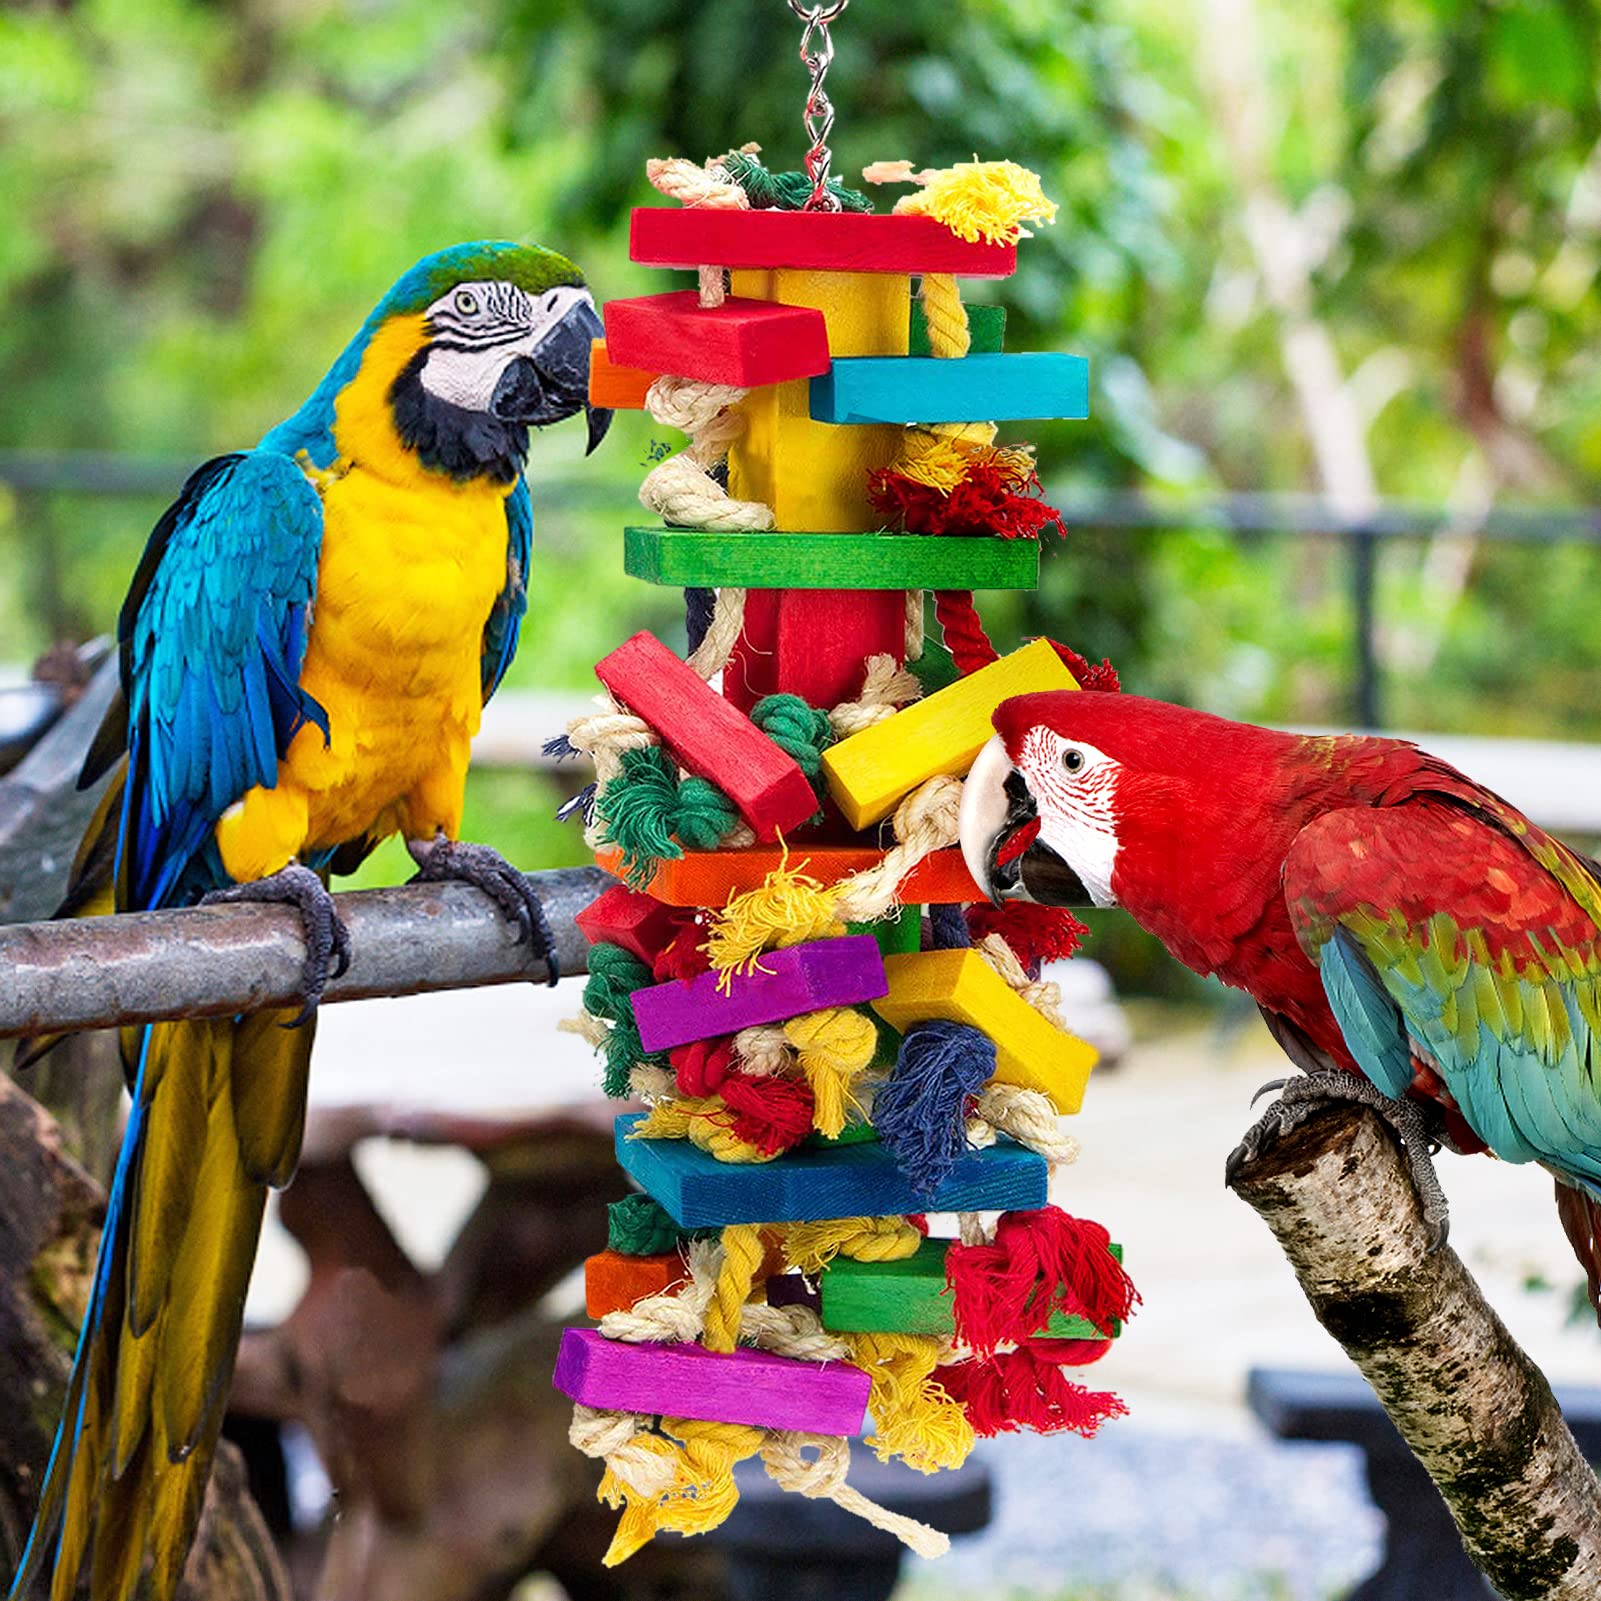 Gazdag Extra Large Bird Parrot Toys For